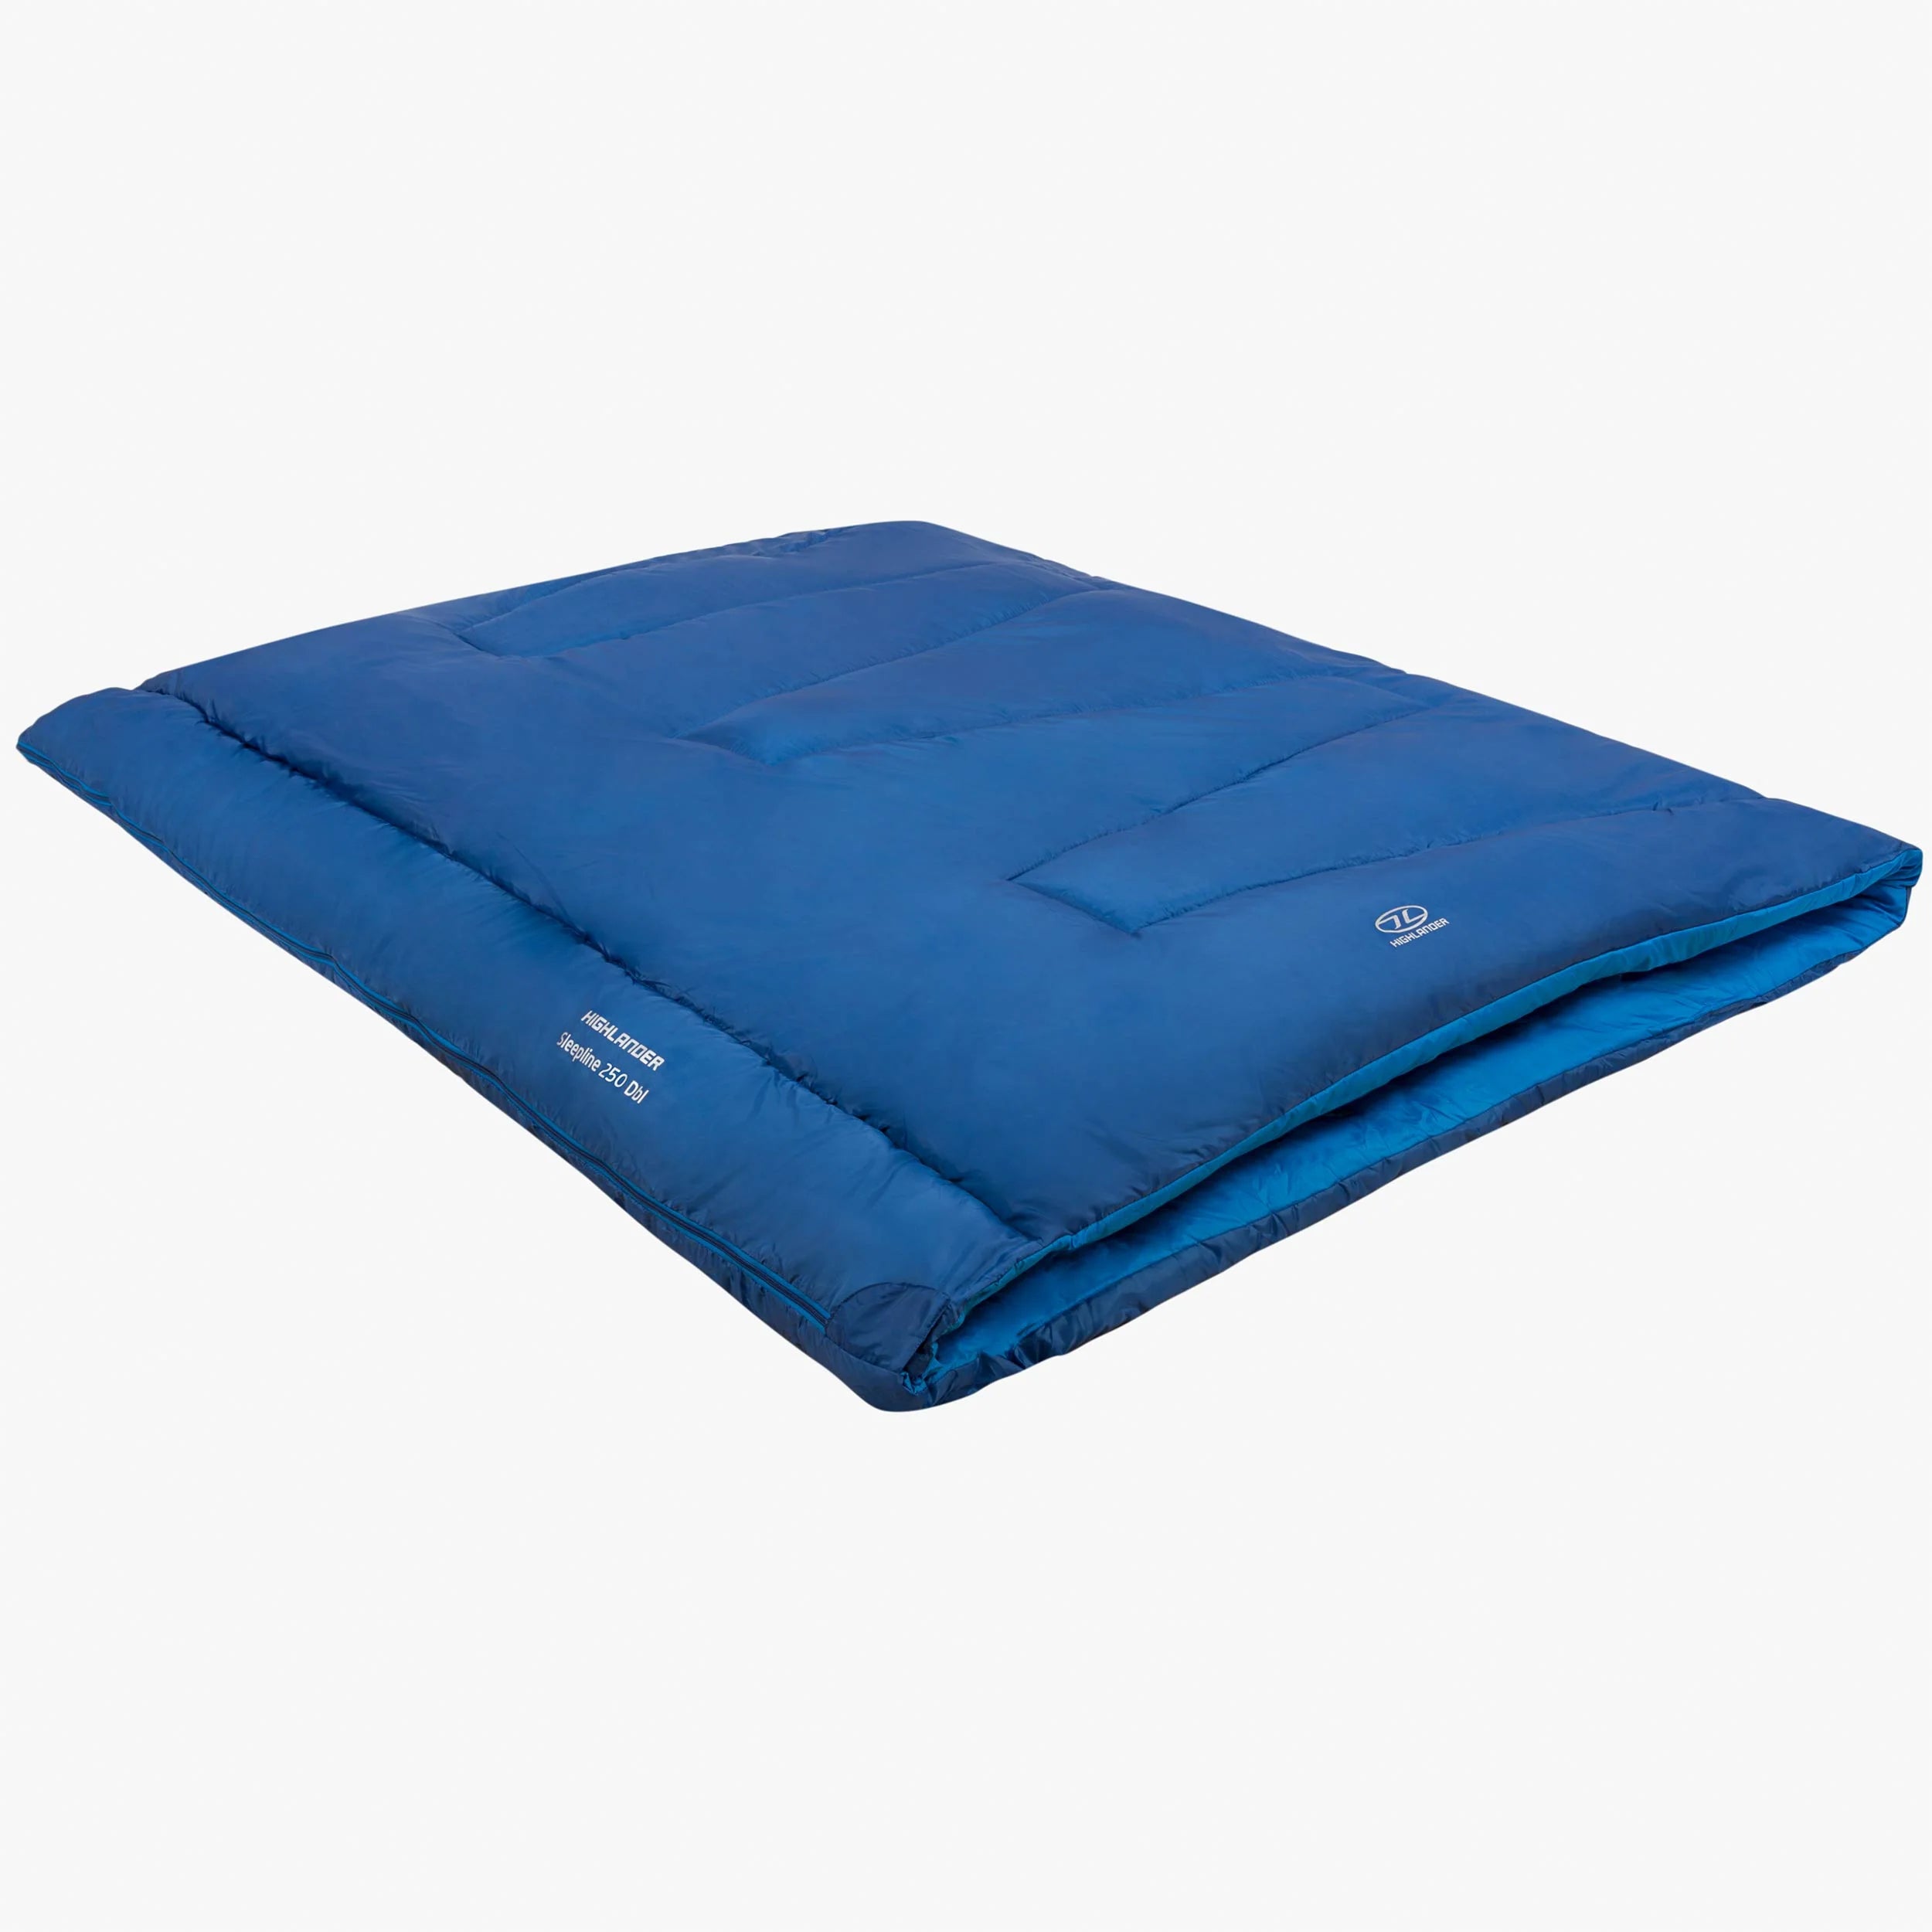 Highlander SLEEPLINE 250 DOUBLE SLEEPING BAG - BLUE Slaapzak - Reisartikelen-nl